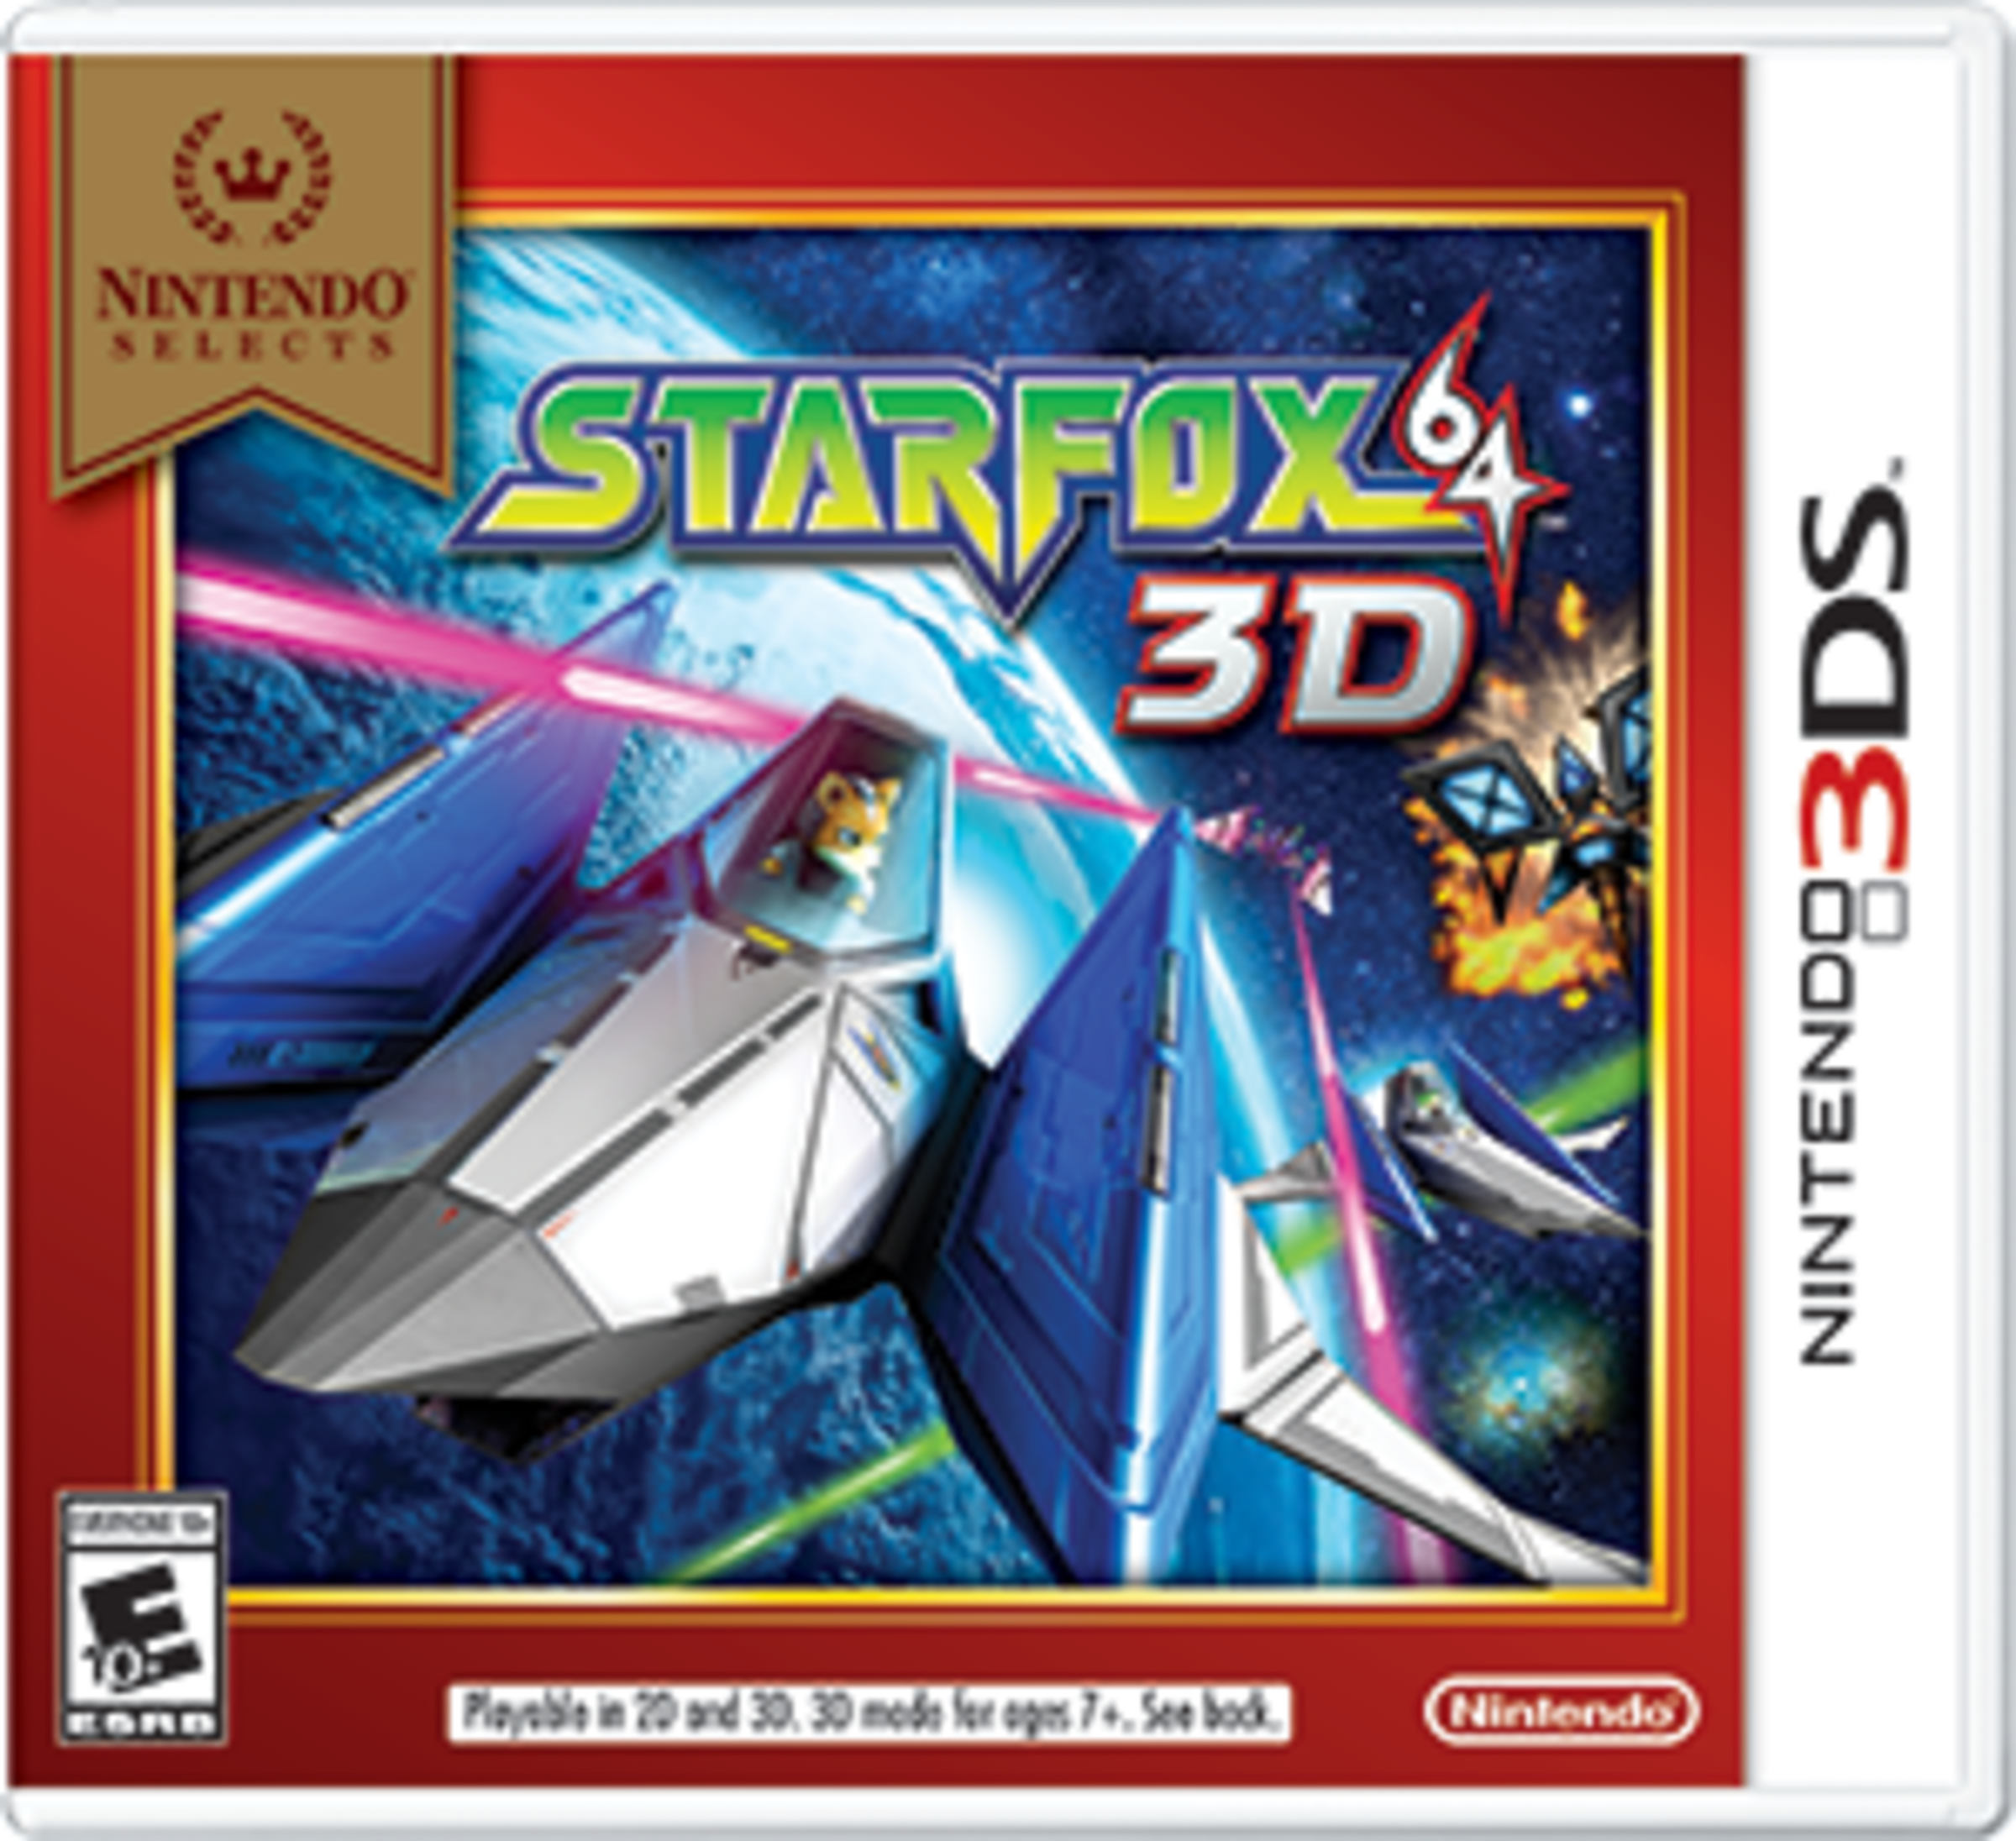 Star Fox 64 3D” Review  [the jinxed darkstar blog]